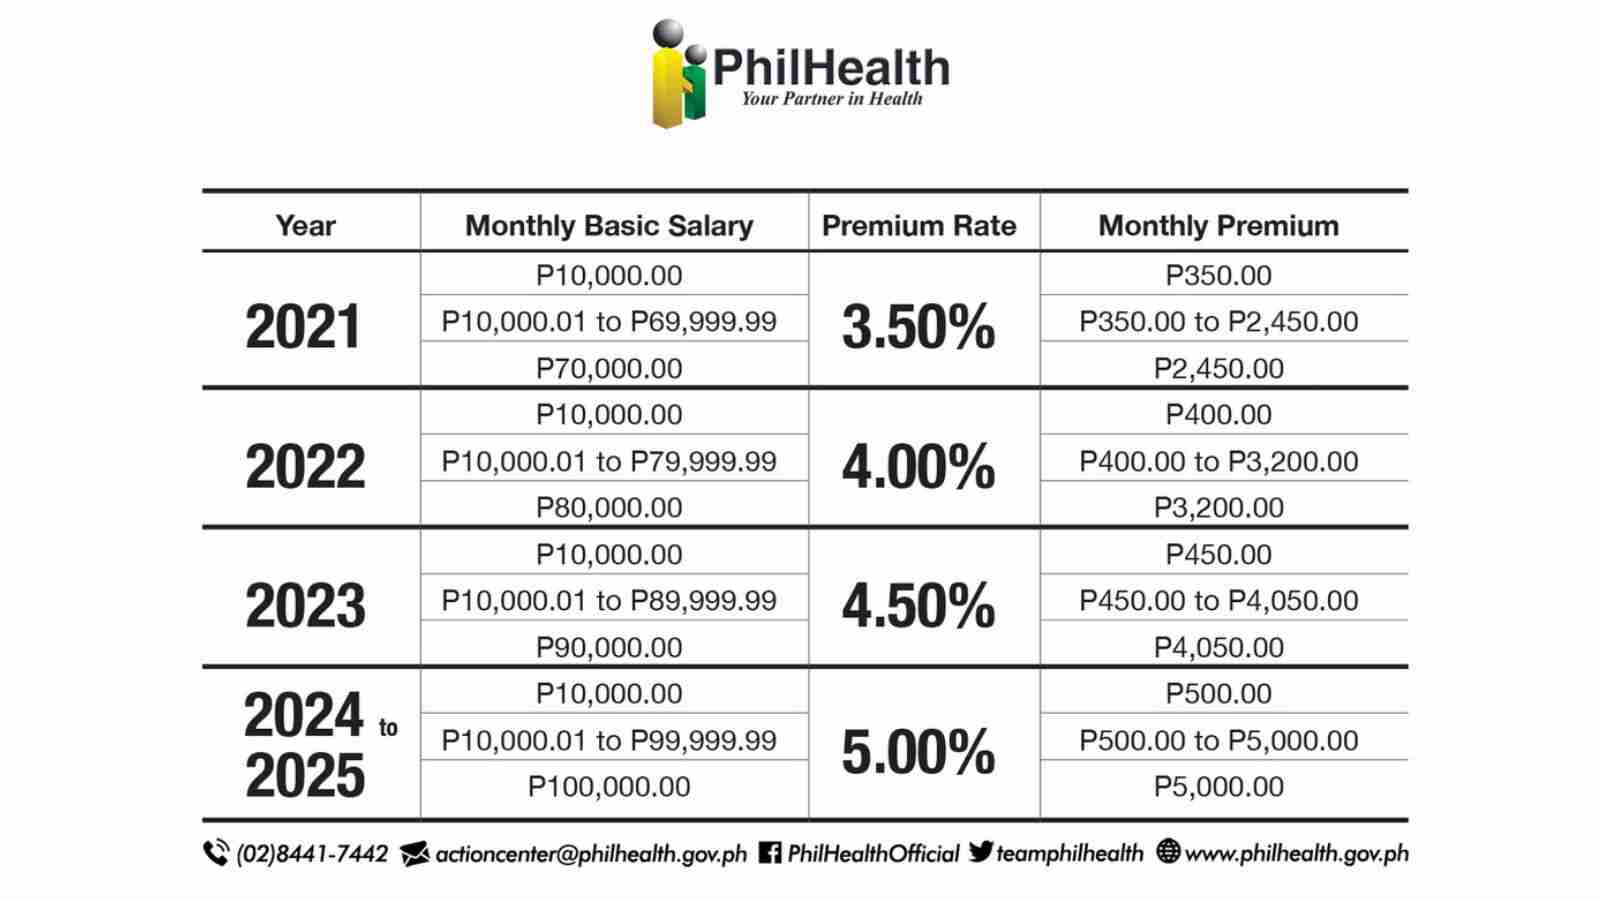 philhealth monthly premiums 2023 2024 2025